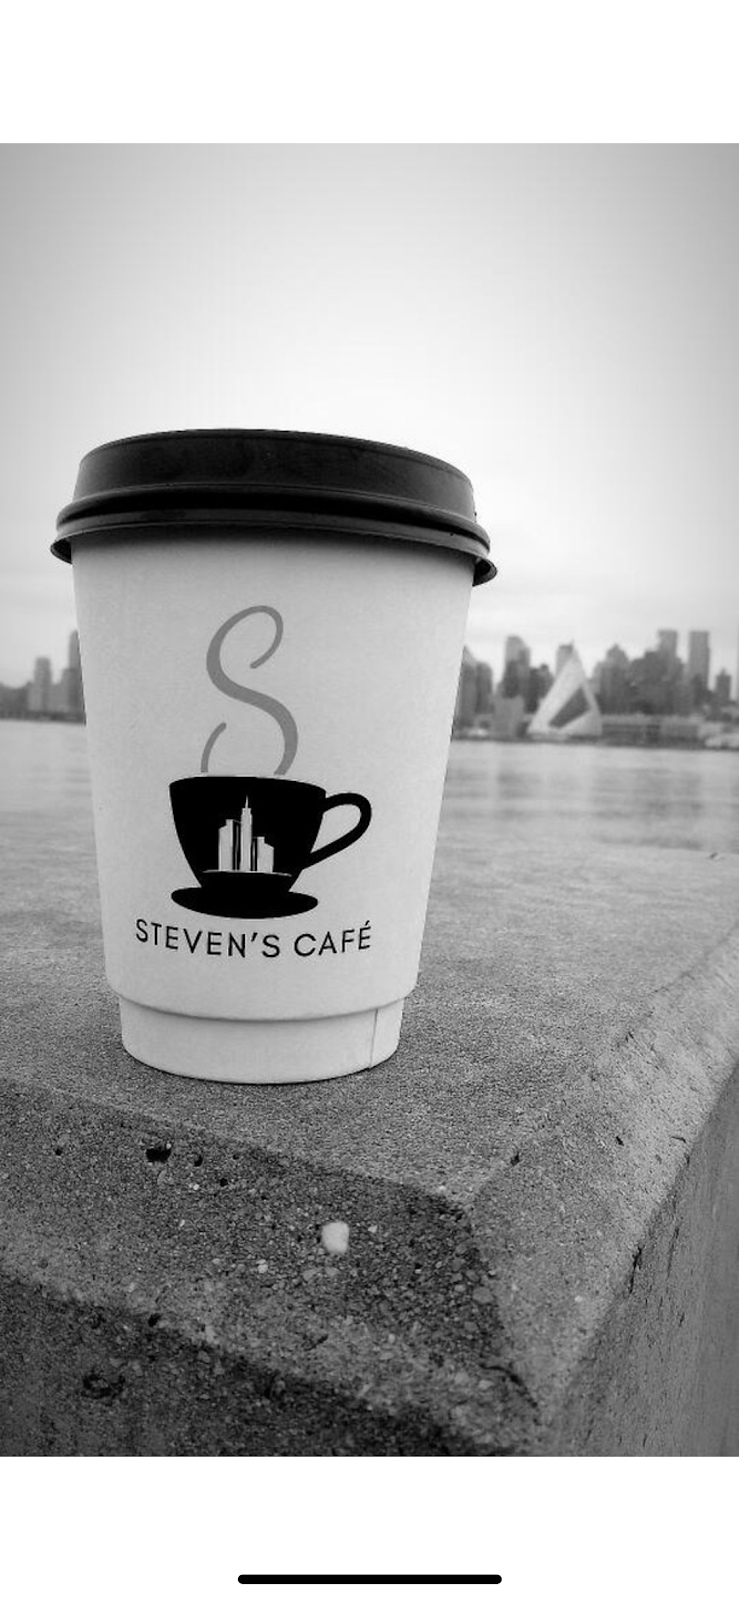 Stevens Cafe | cafe | 1200 Ave at Port Imperial, Weehawken, NJ 07086, USA | 2013308811 OR +1 201-330-8811